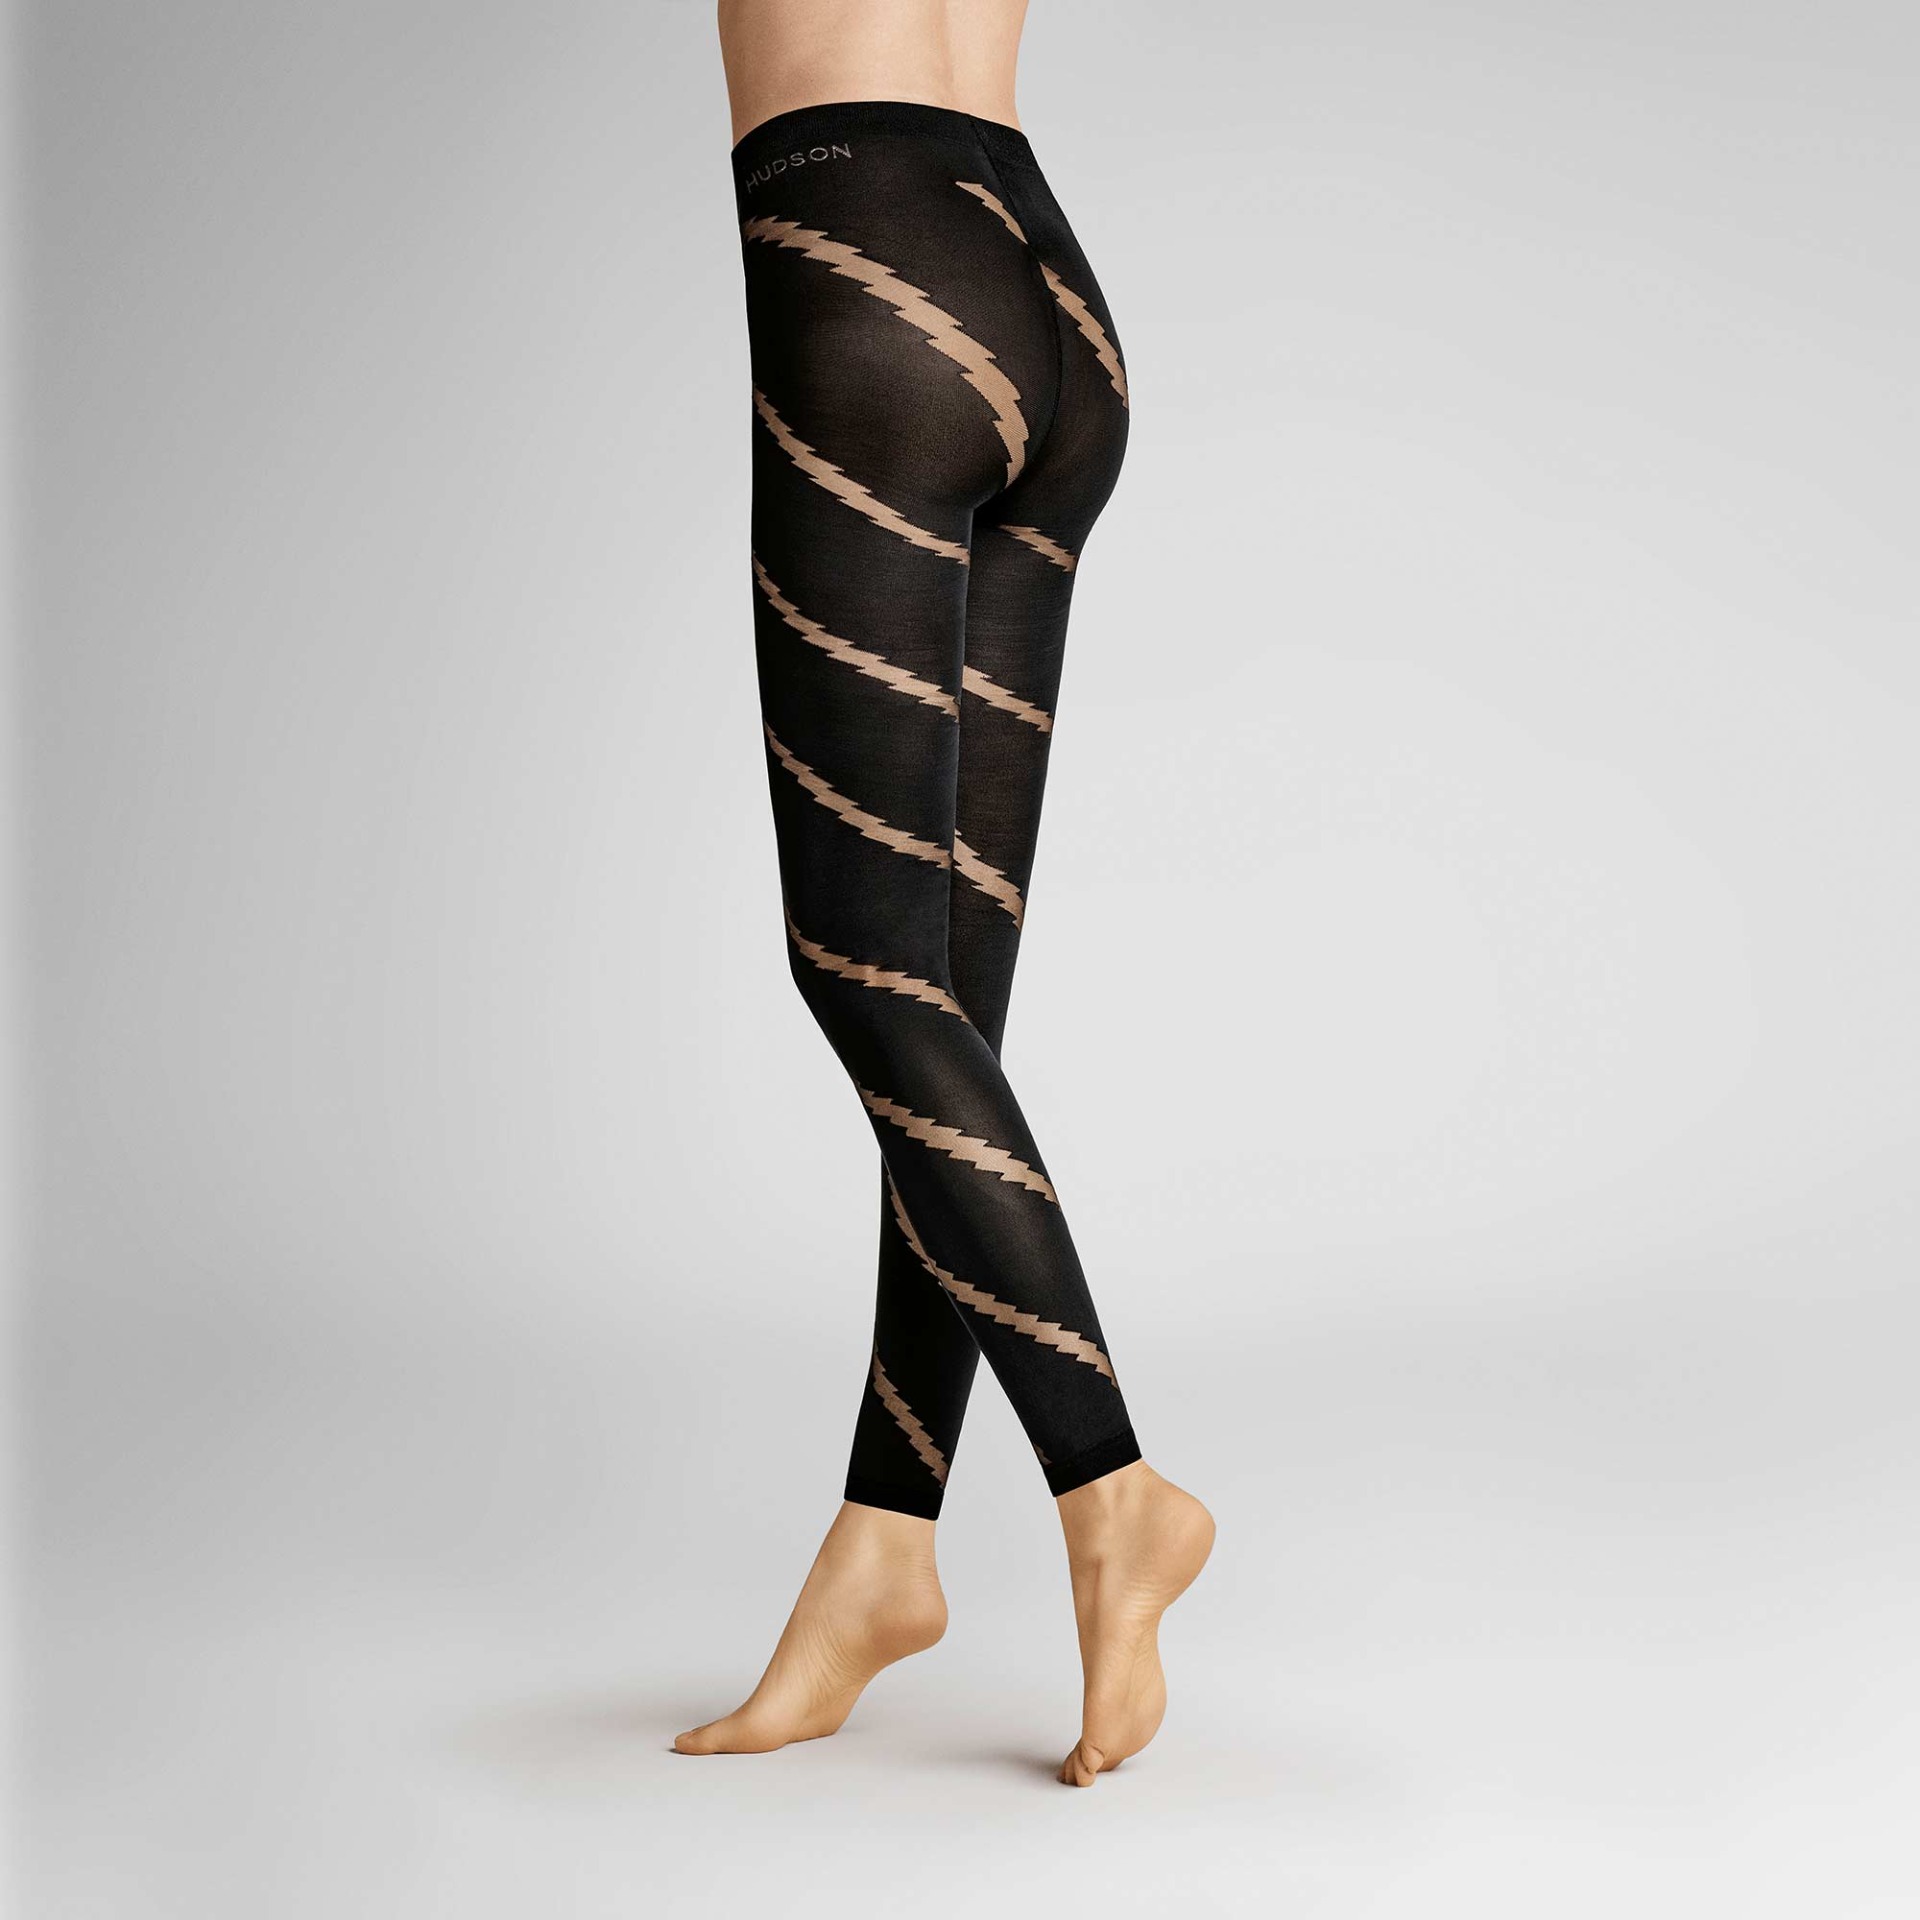 HUDSON Damen SPLIT -  36/38 - Leggings mit diagonalem Ausbrenner-Muster - Black (Schwarz)